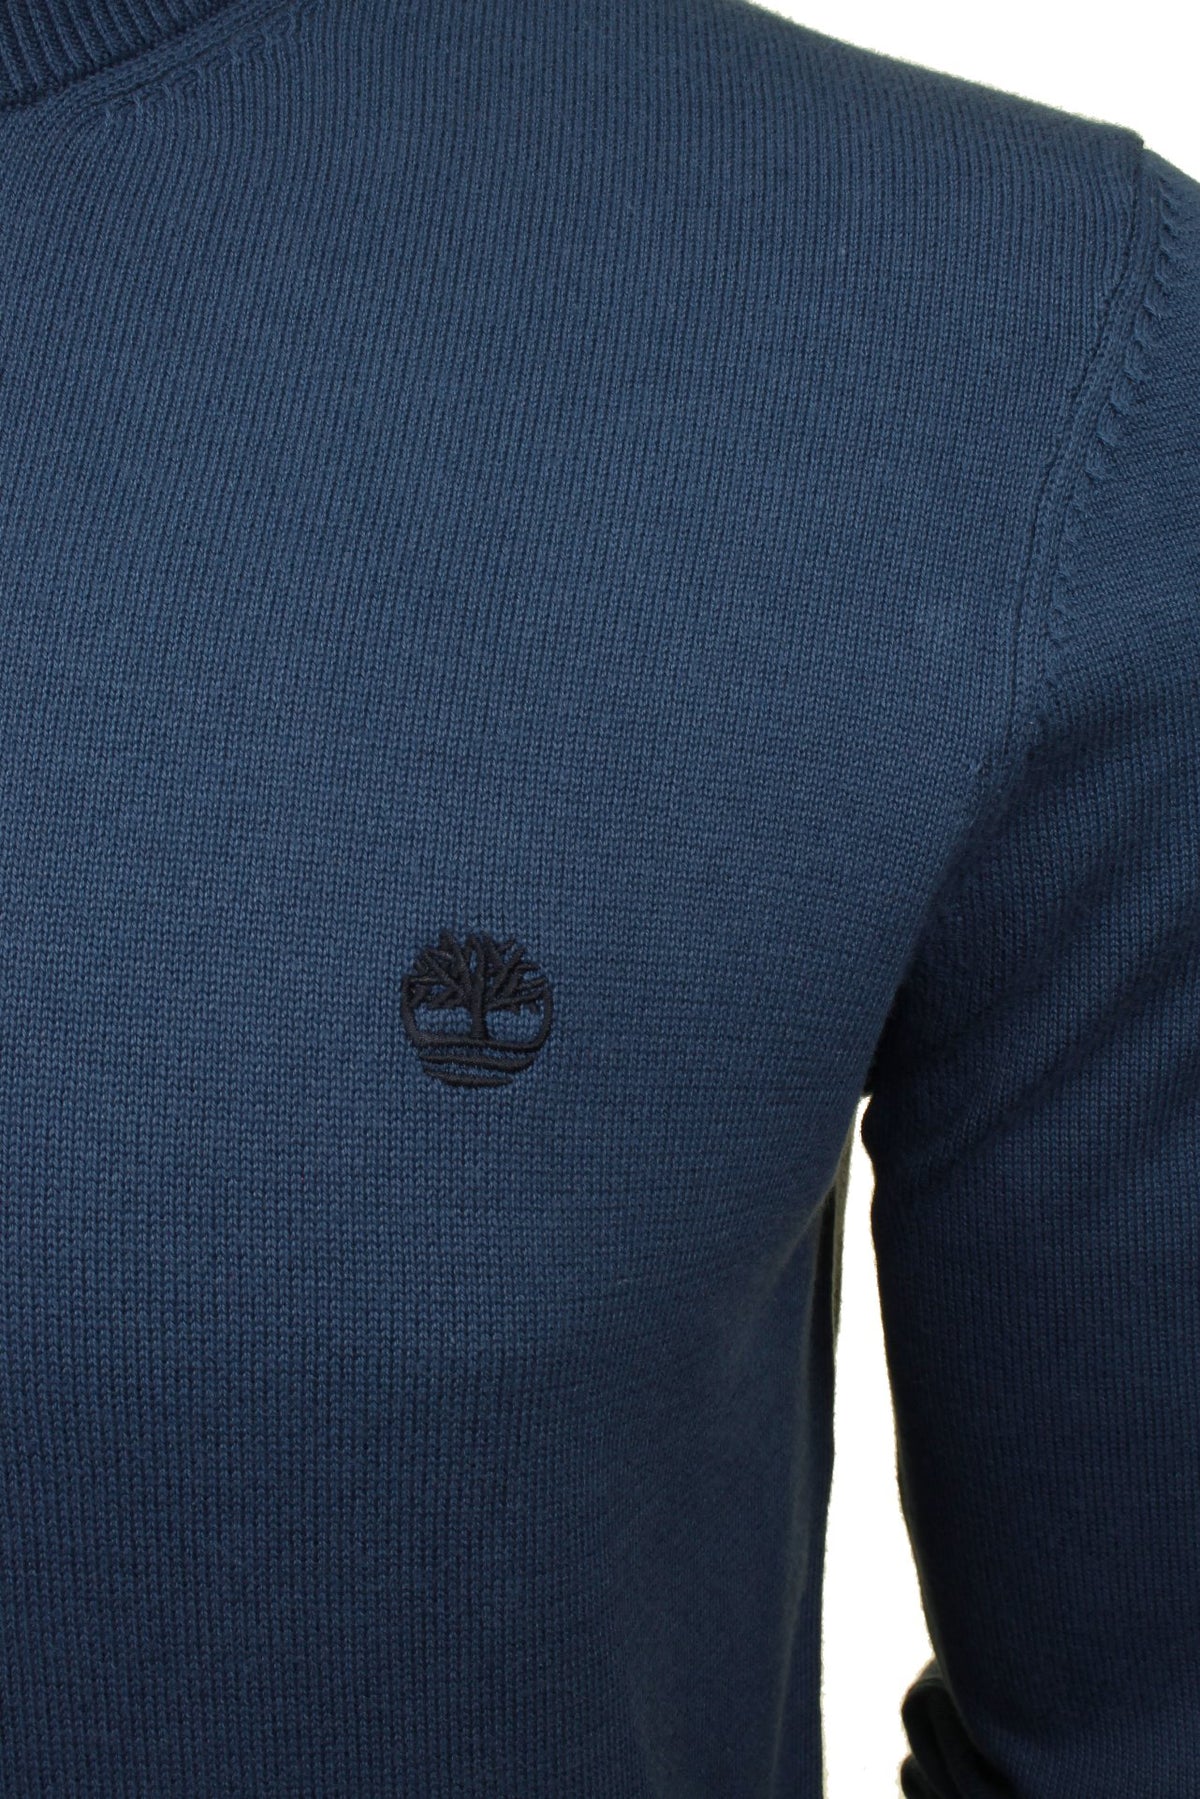 Timberland Mens Jumper 'Williams River Cotton Crew Sweater' - Long Sleeved, 02, Tb0A2Bmm, Dark Denim